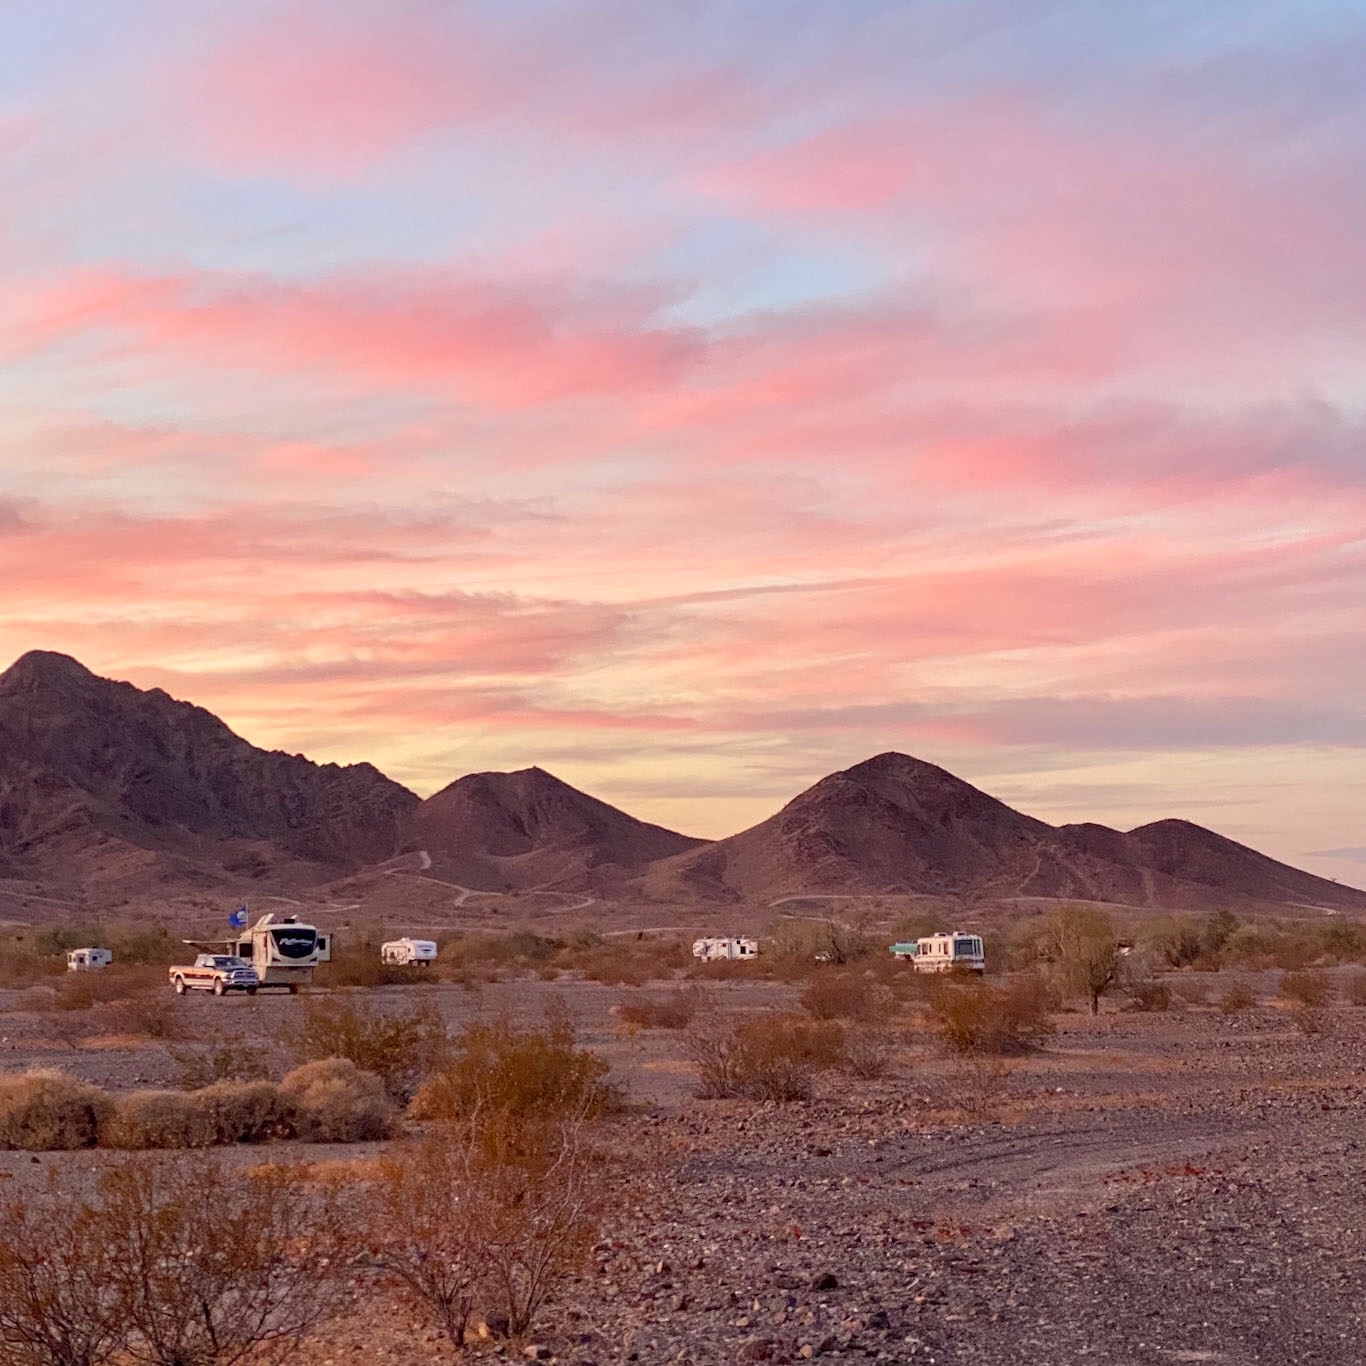 Desert Messenger, Quartzsite, AZ: Quartzsite, Arizona gets 